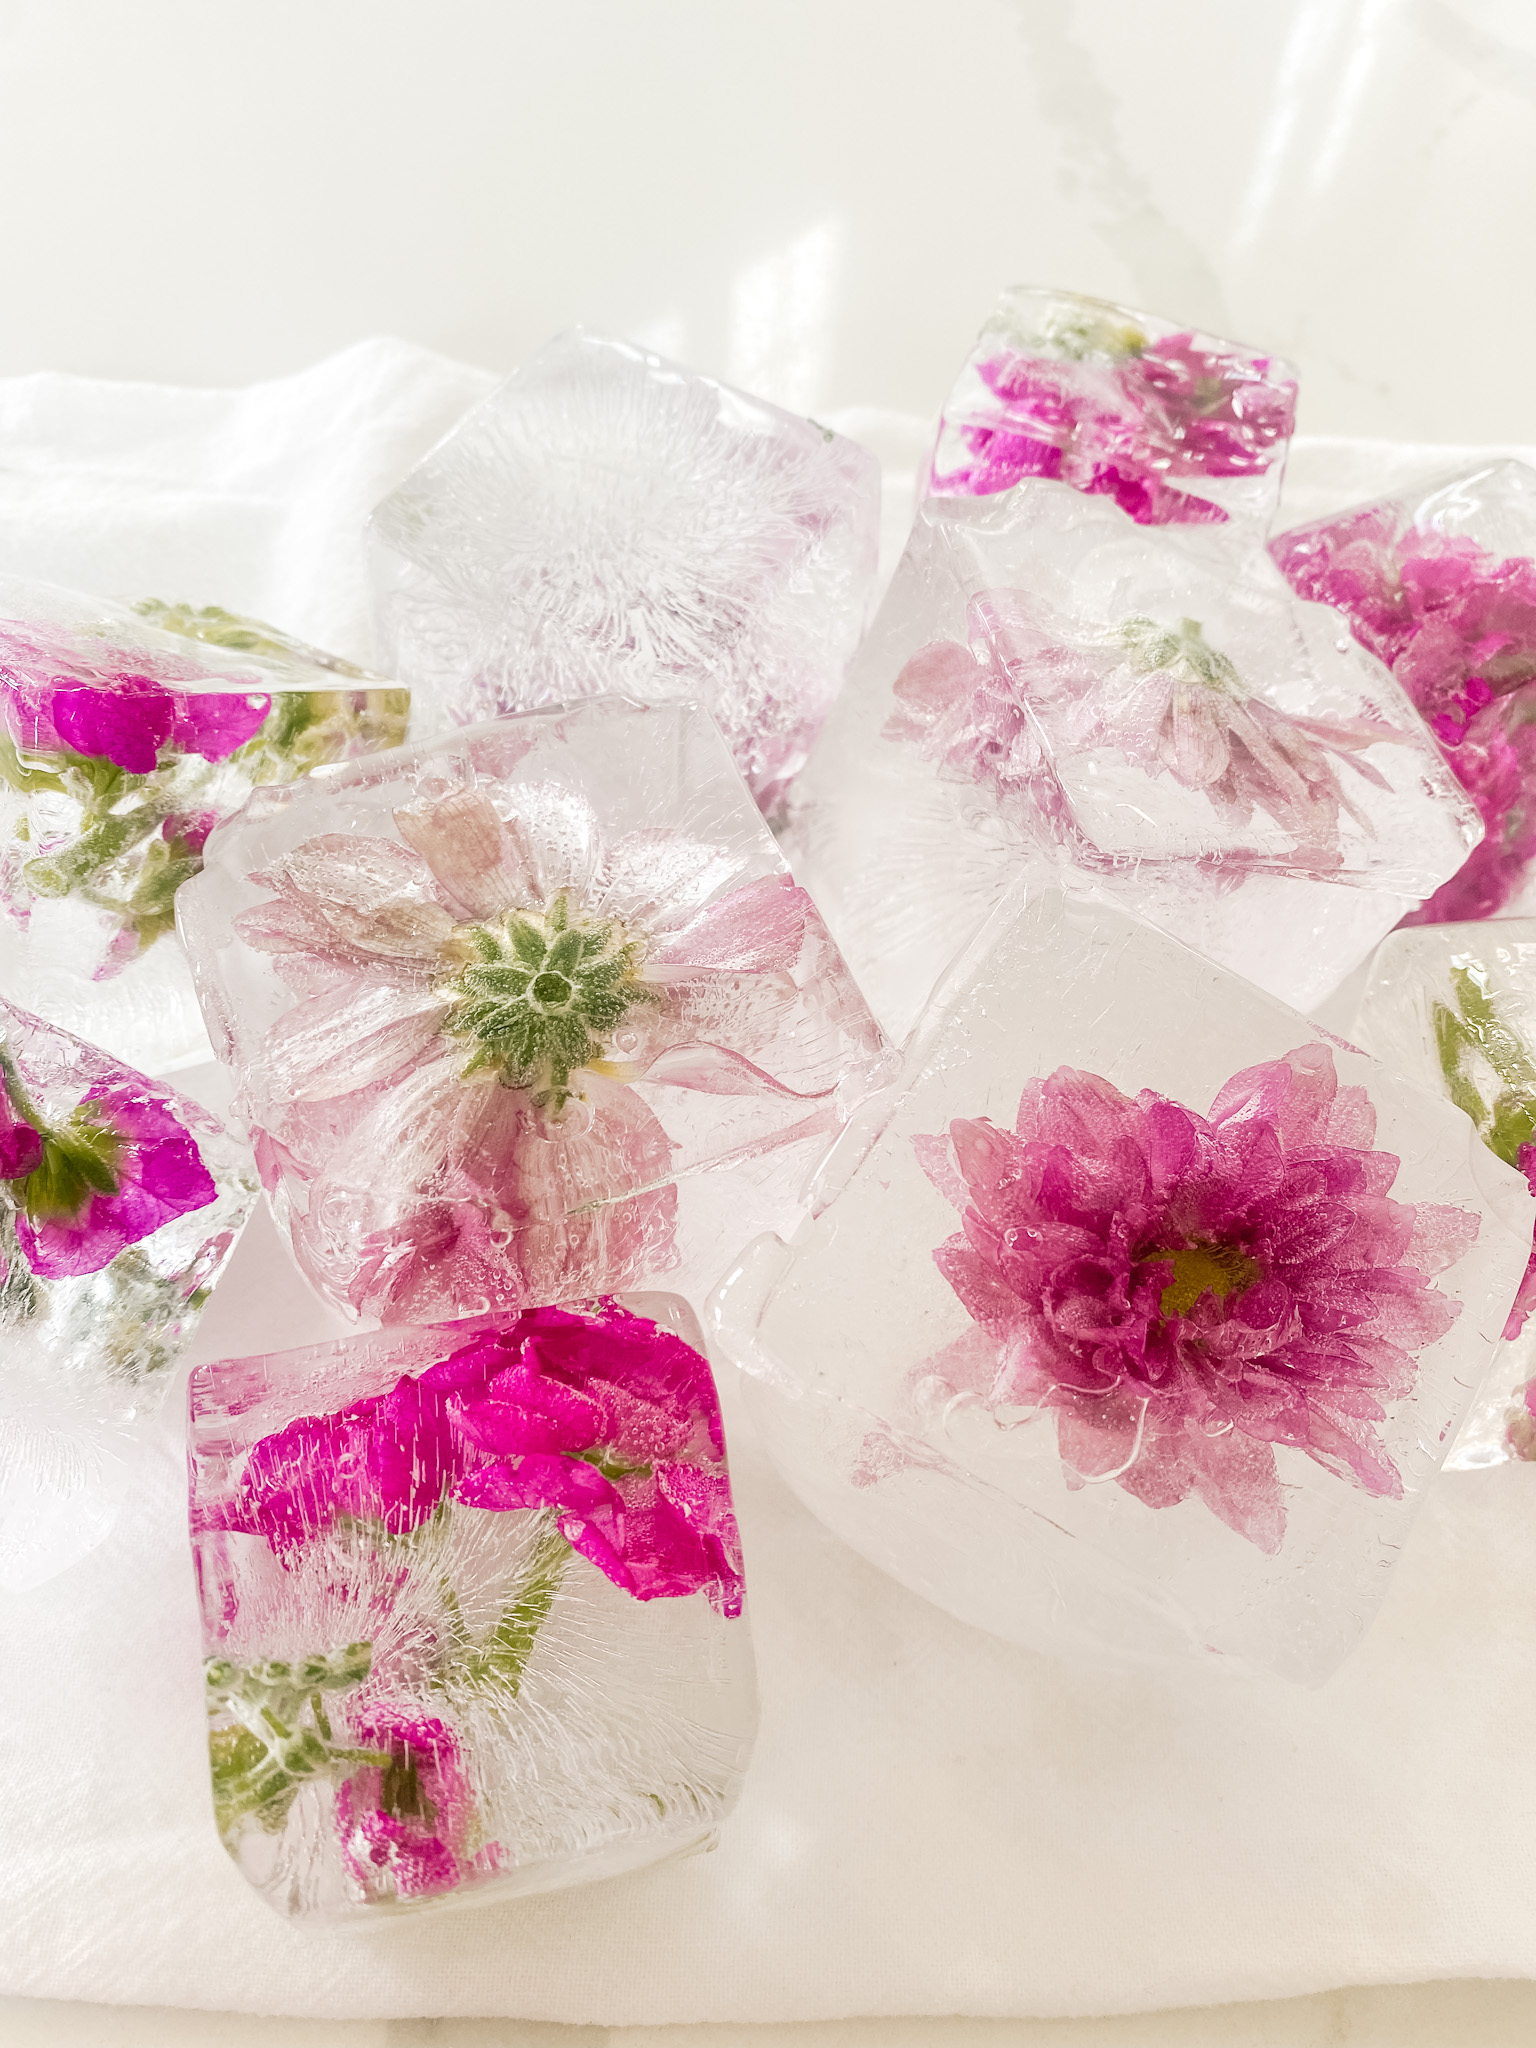 Flower Ice Cubes